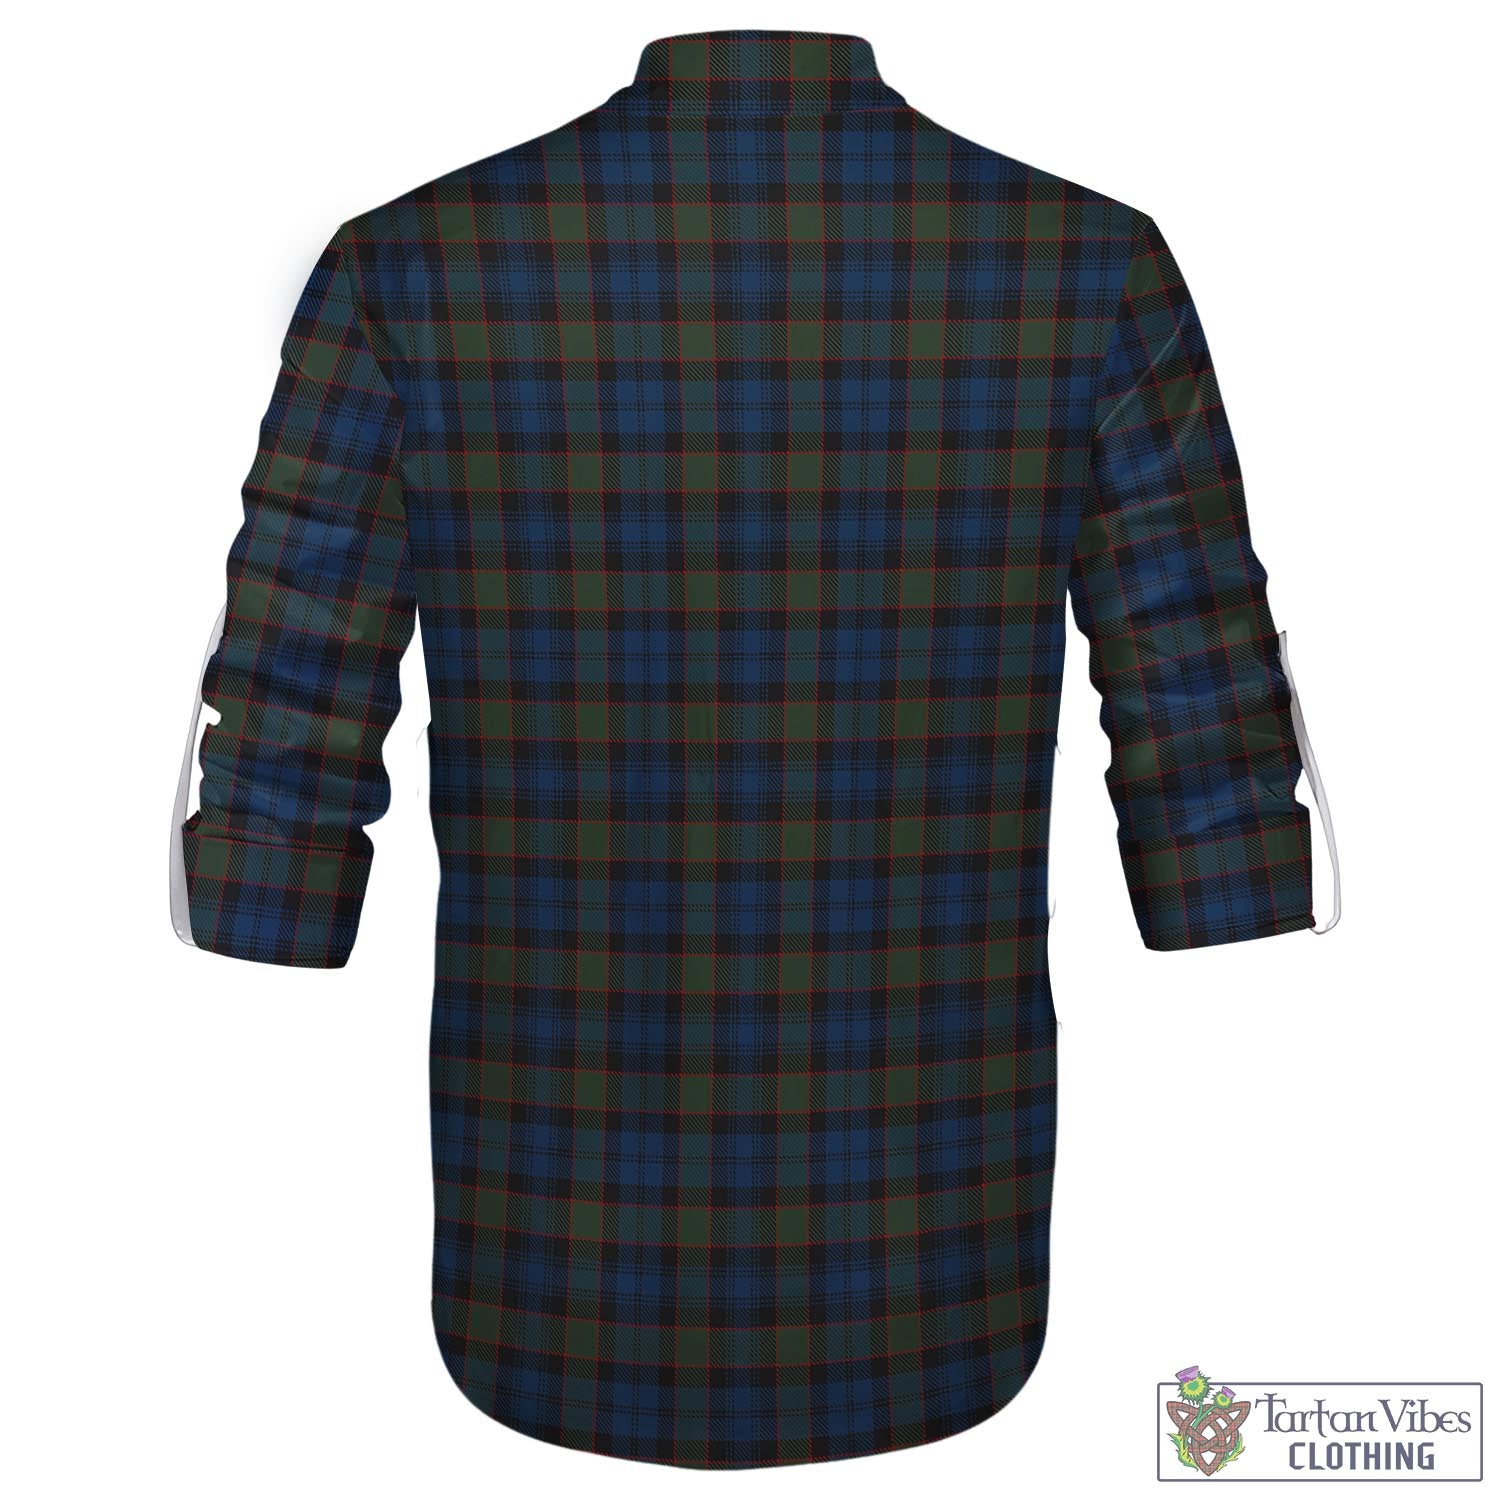 Tartan Vibes Clothing Riddoch Tartan Men's Scottish Traditional Jacobite Ghillie Kilt Shirt